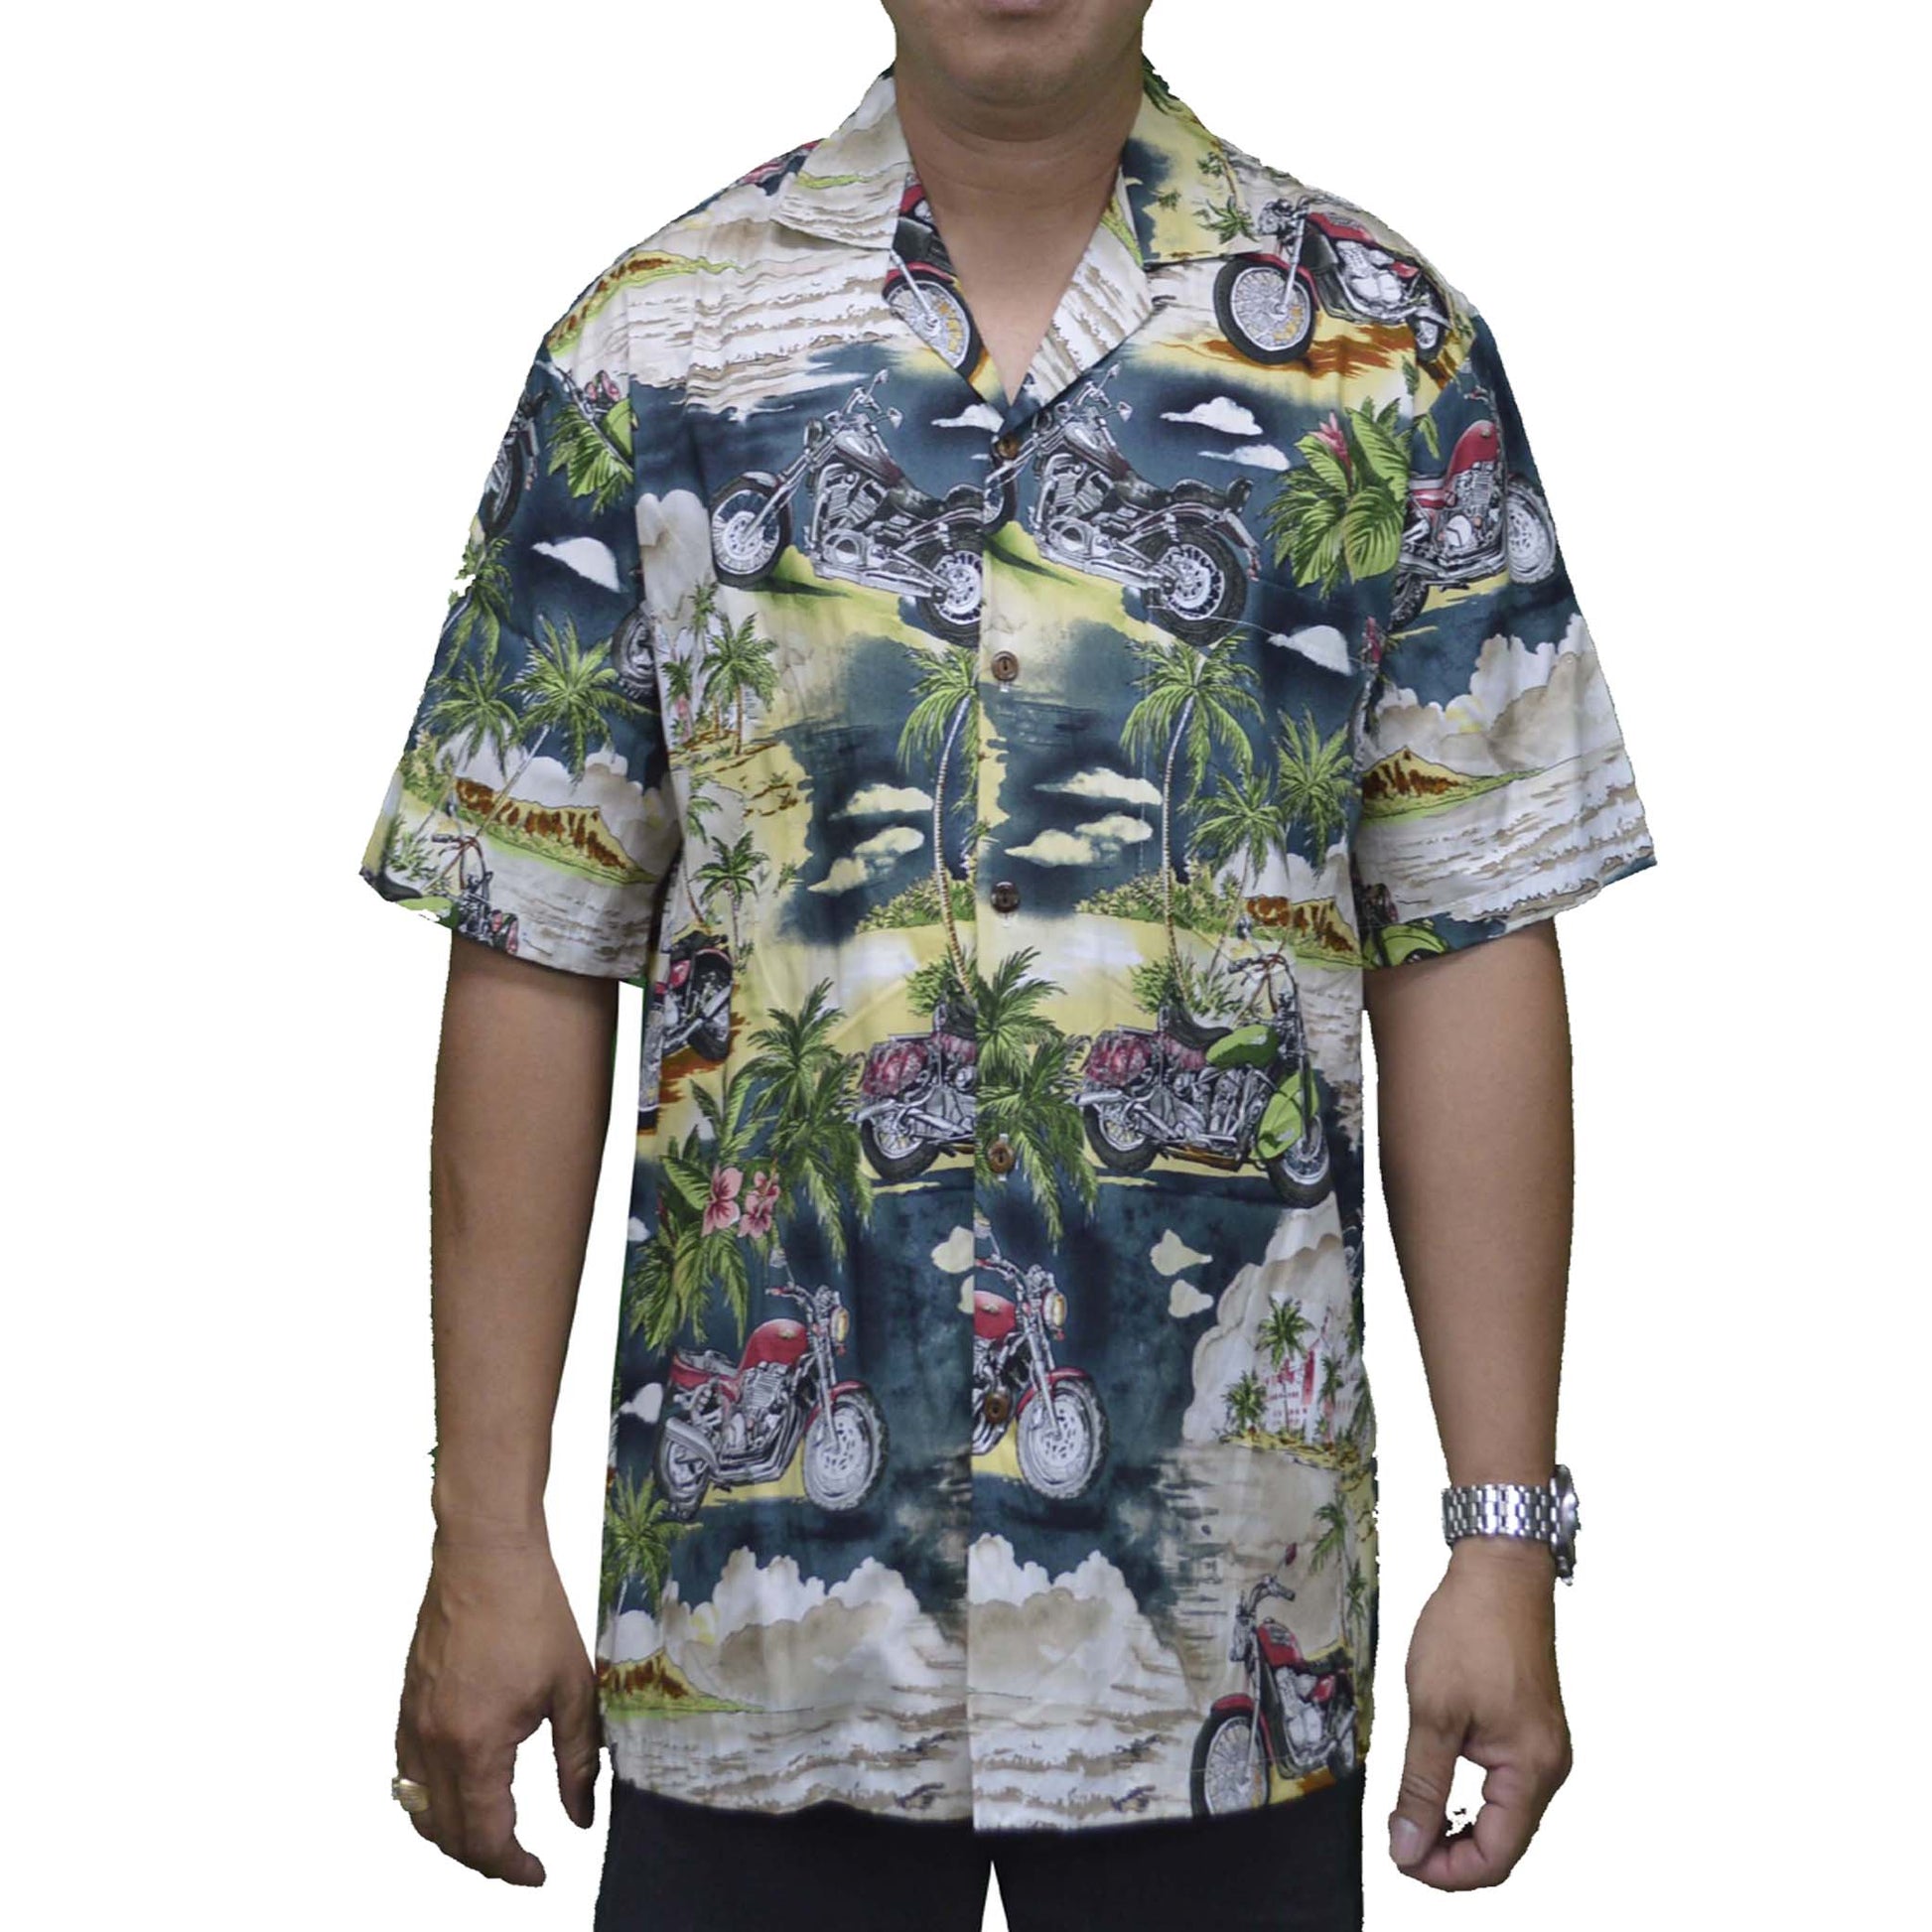 blue hawaiian cotton aloha shirt with motorcycle scene theme